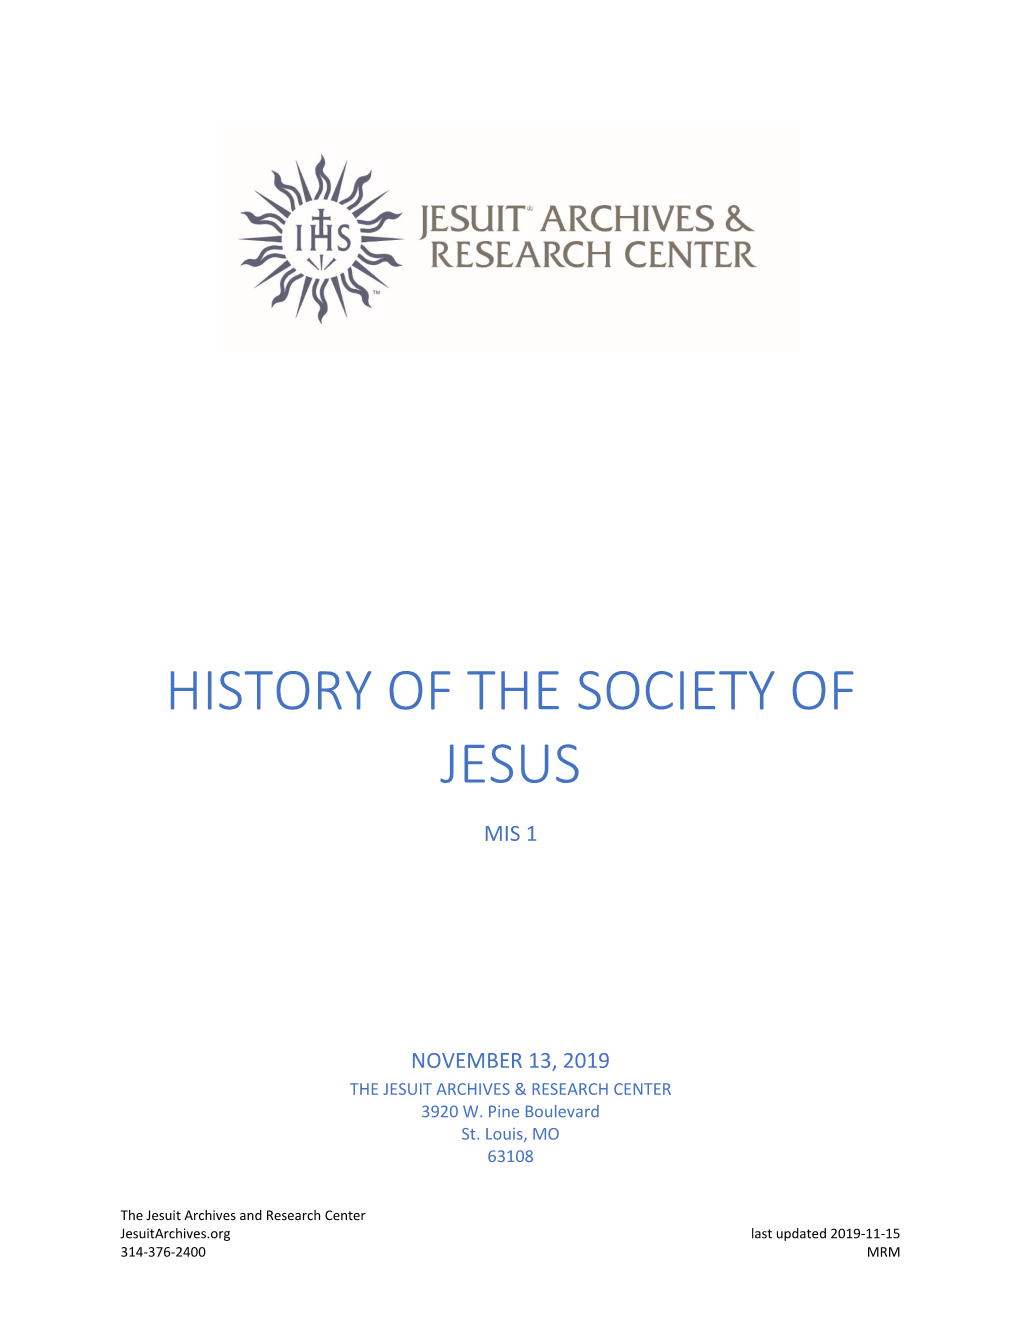 MIS RG 1 History of the Society of Jesus